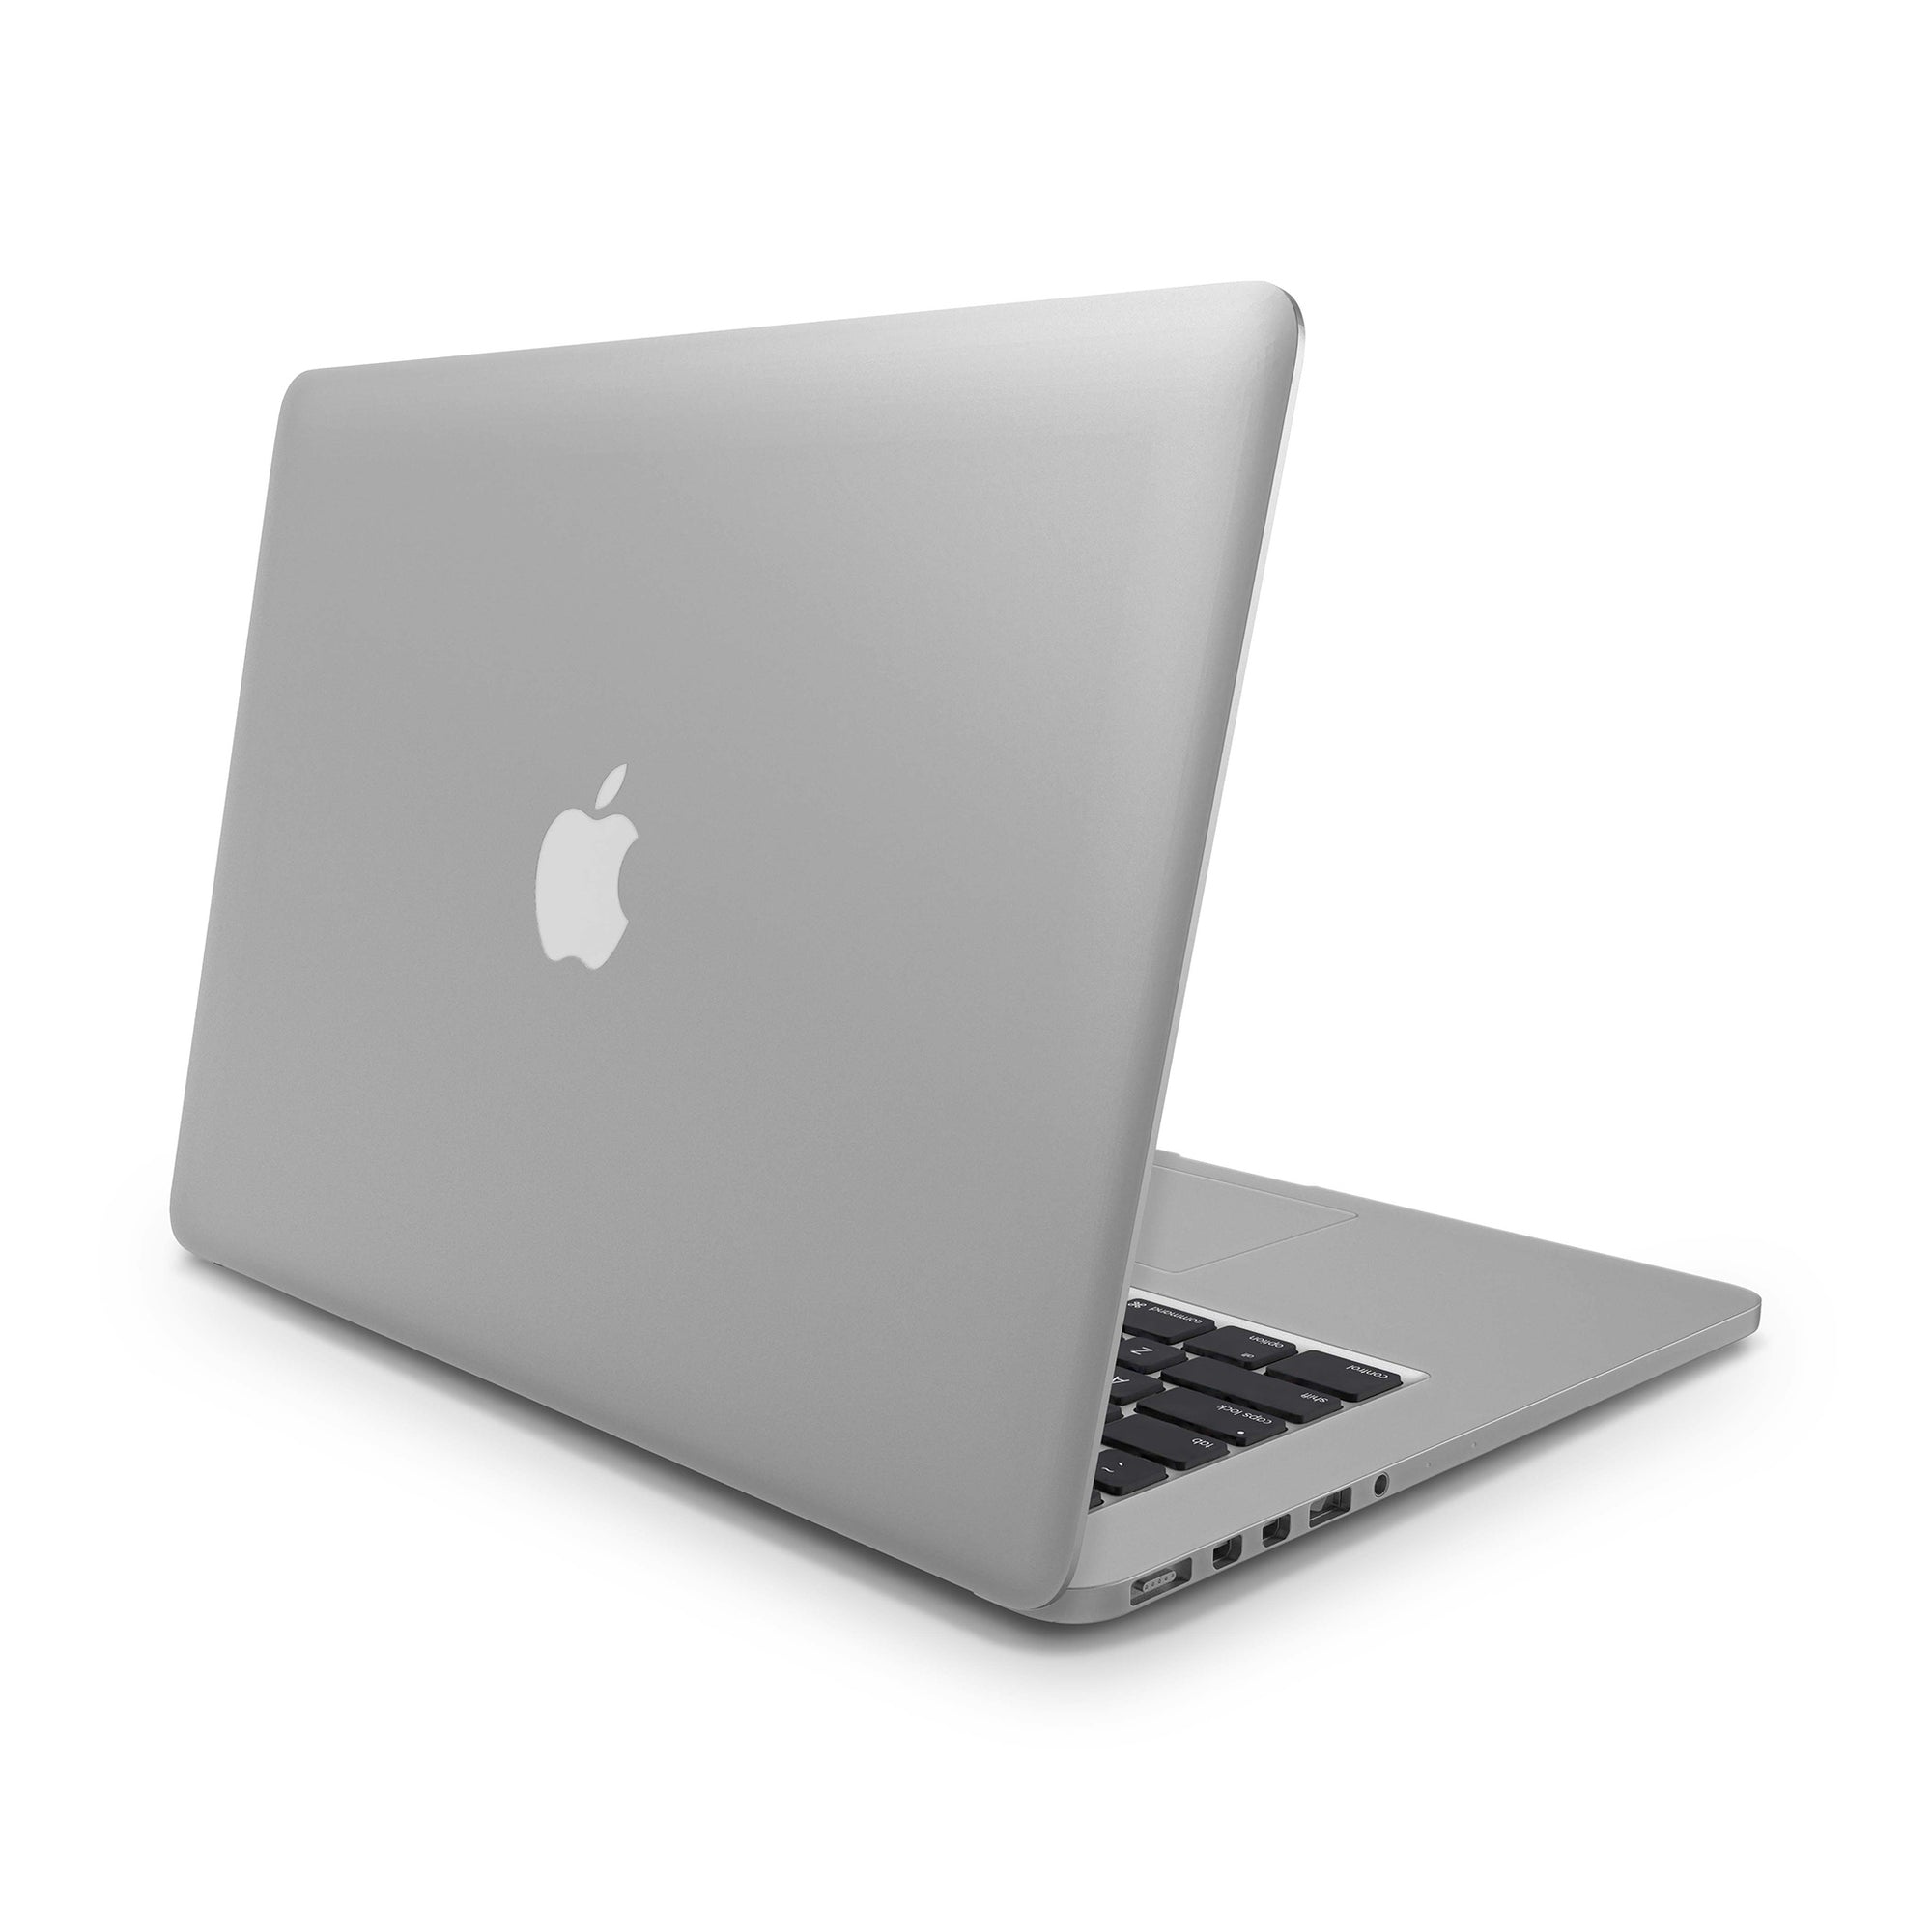 MacBook Pro 15-inch (Retina, 2012-2015) Cases and Skins